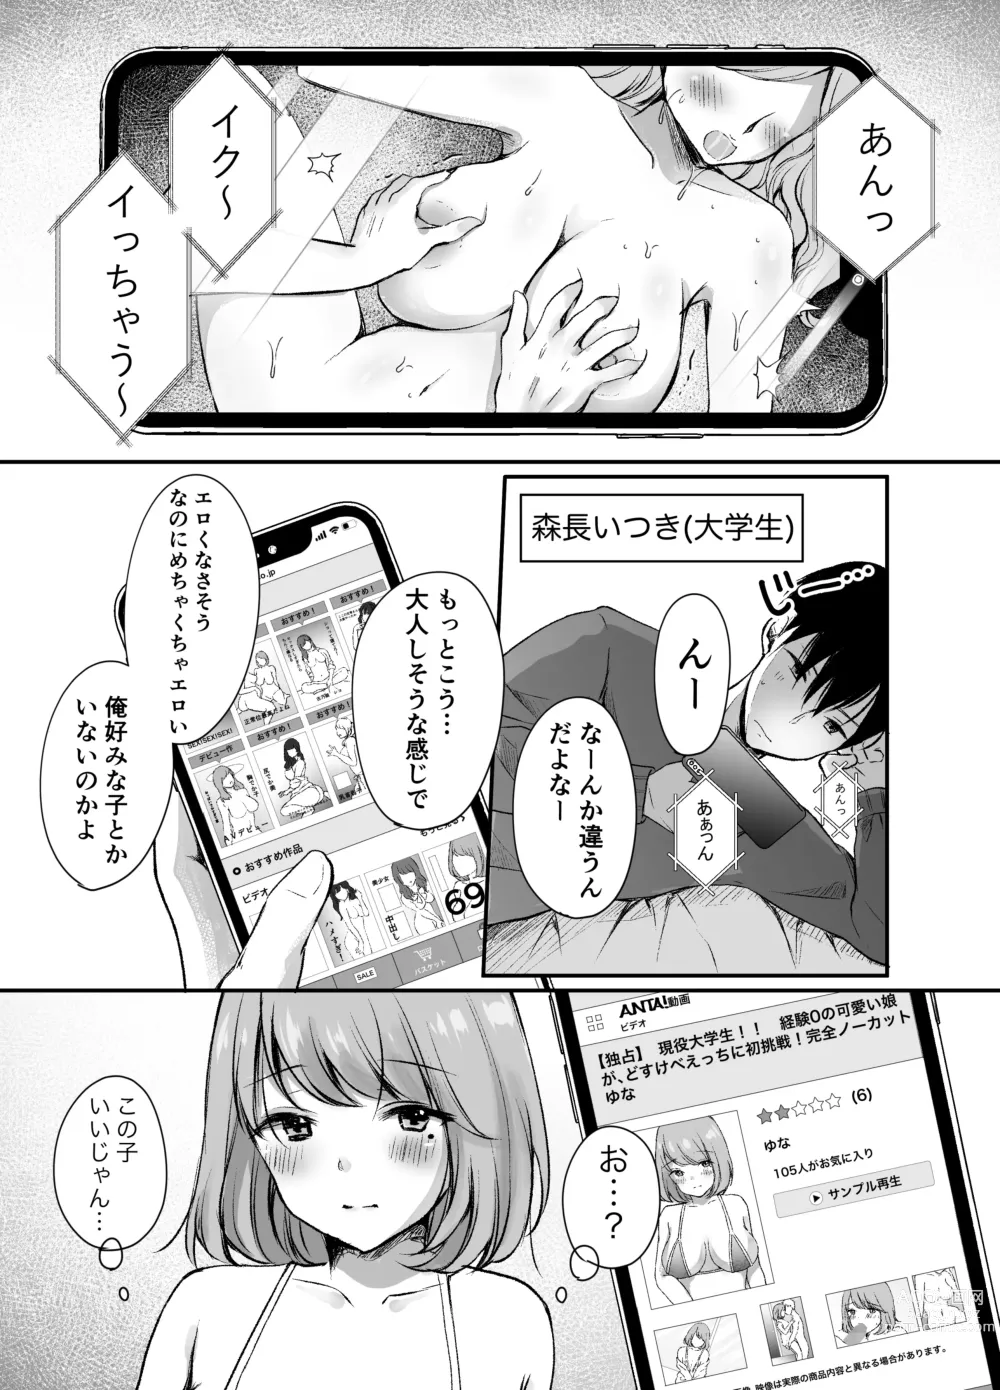 Page 4 of doujinshi Ore no Ane ga AV Joyuu!?